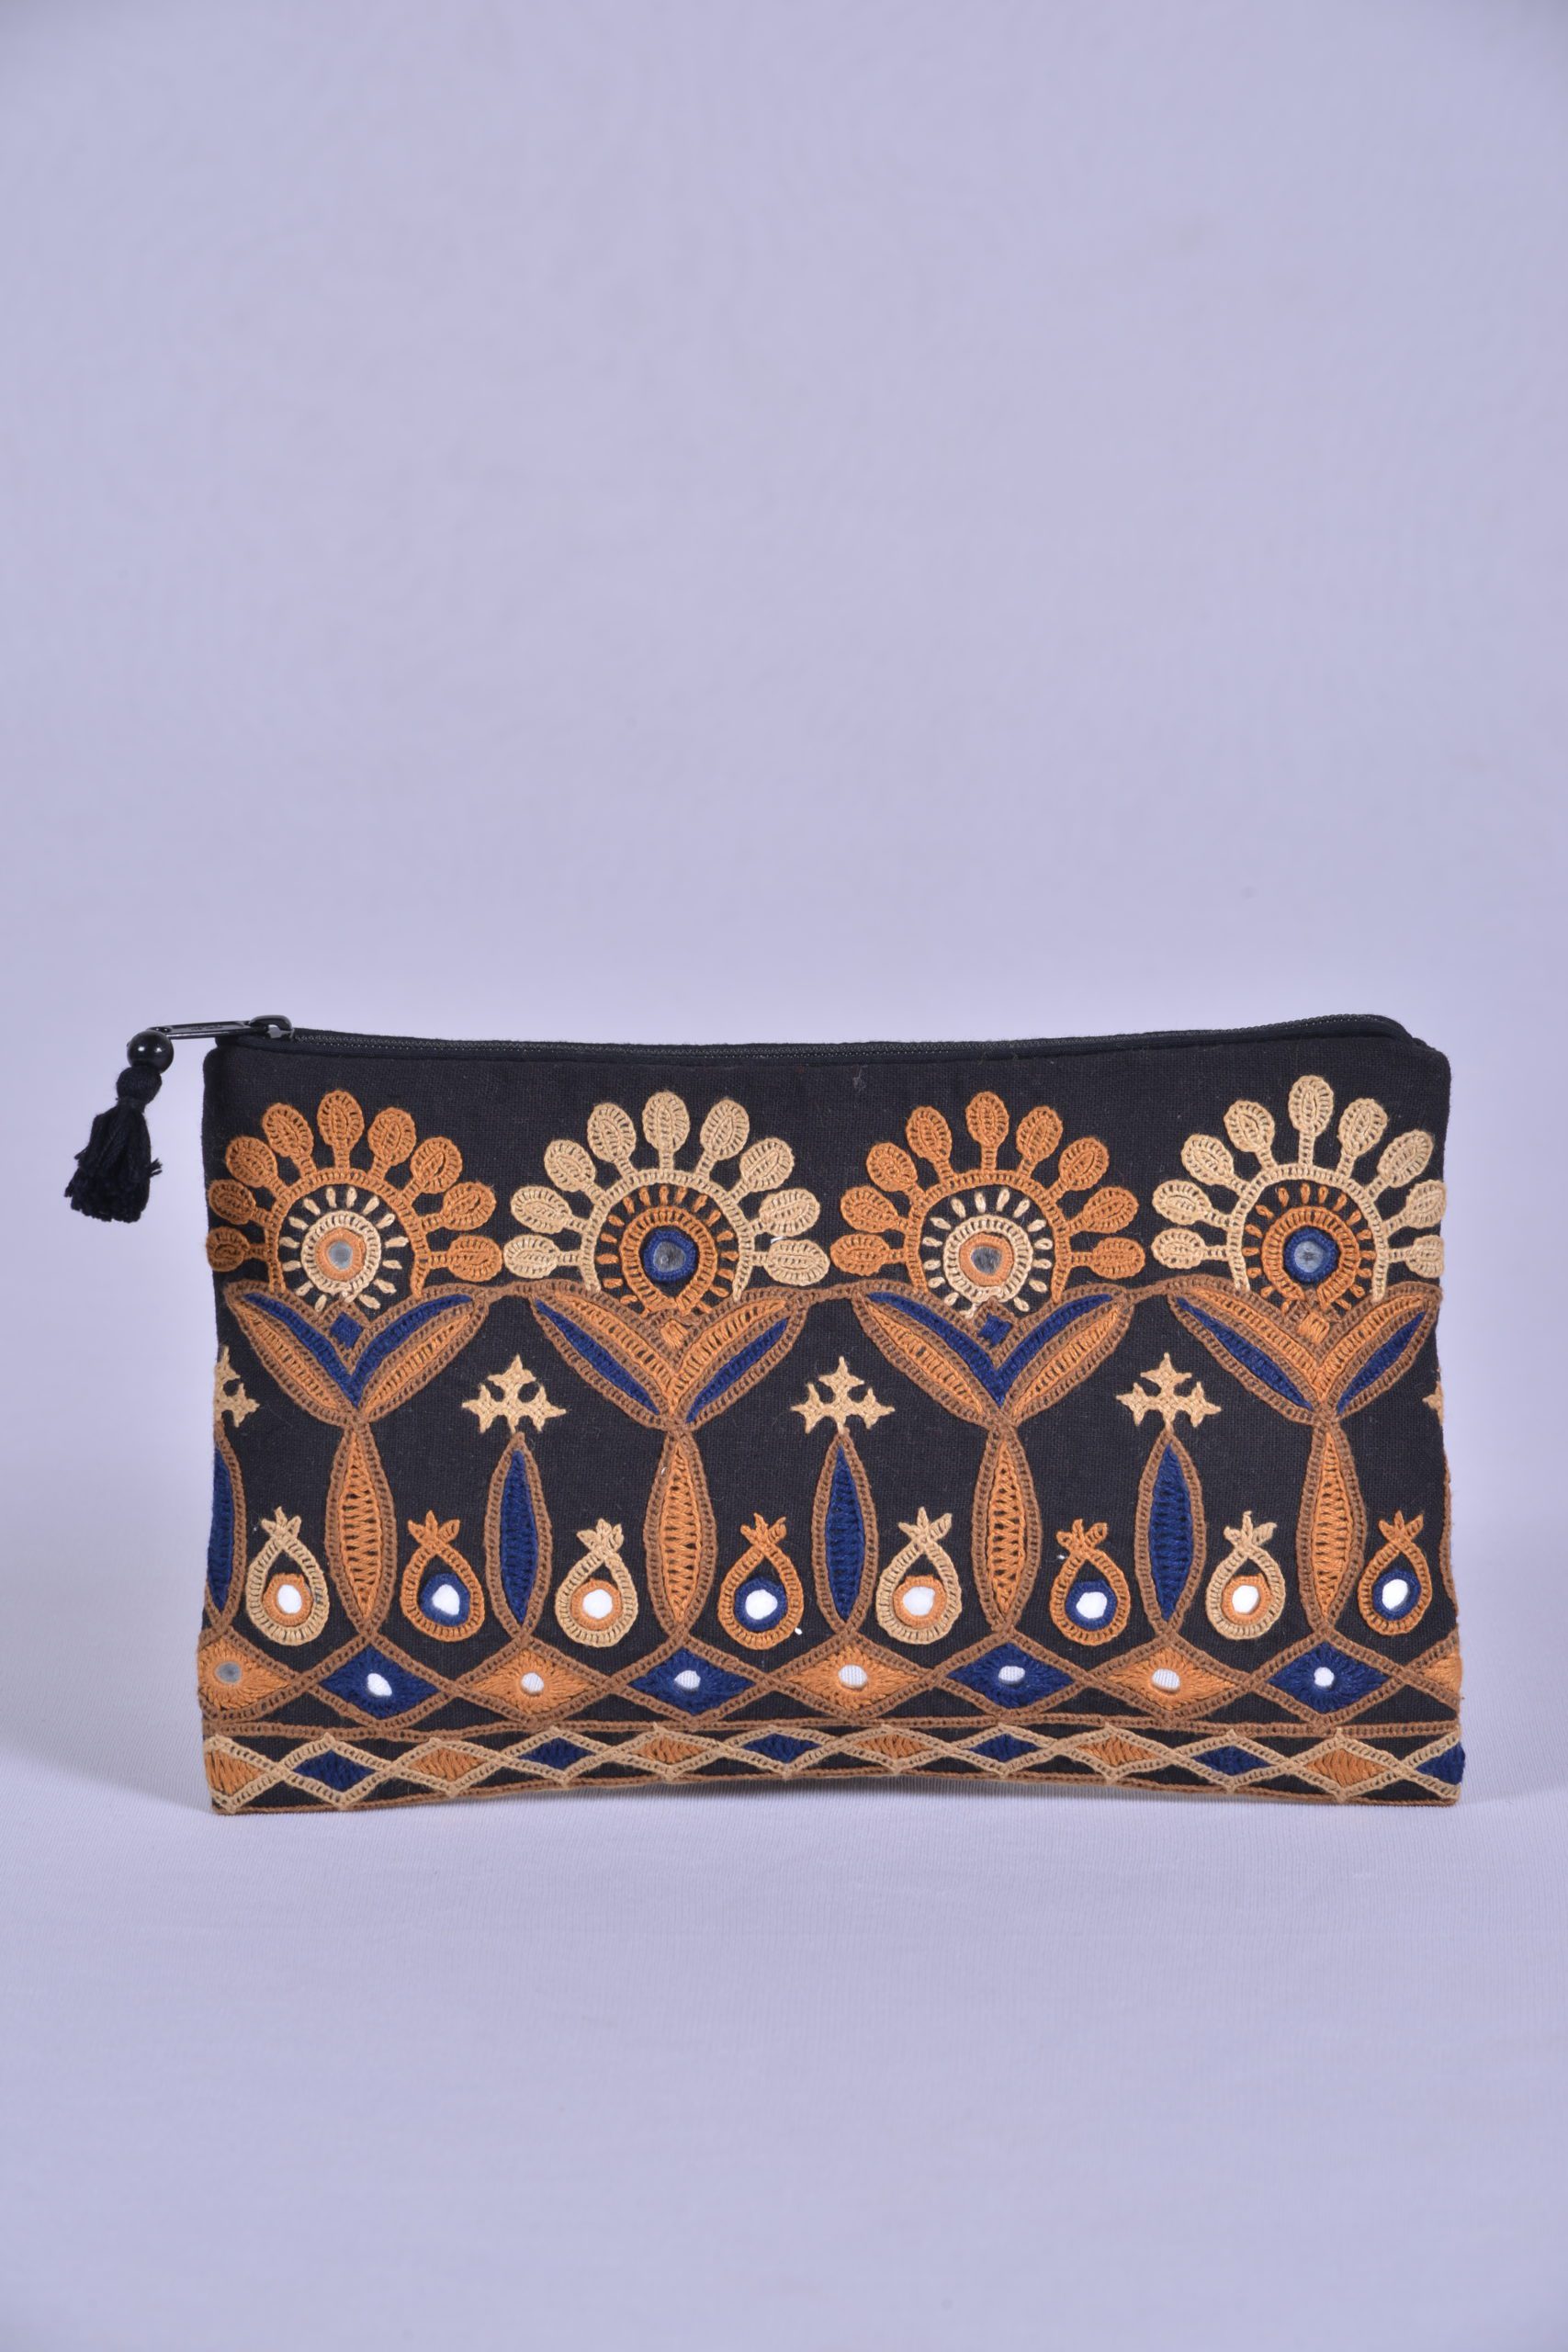 Multicolored Rajkot Embroidery Designer Ethnic Clutch Purse for Women -  VedIndia.com